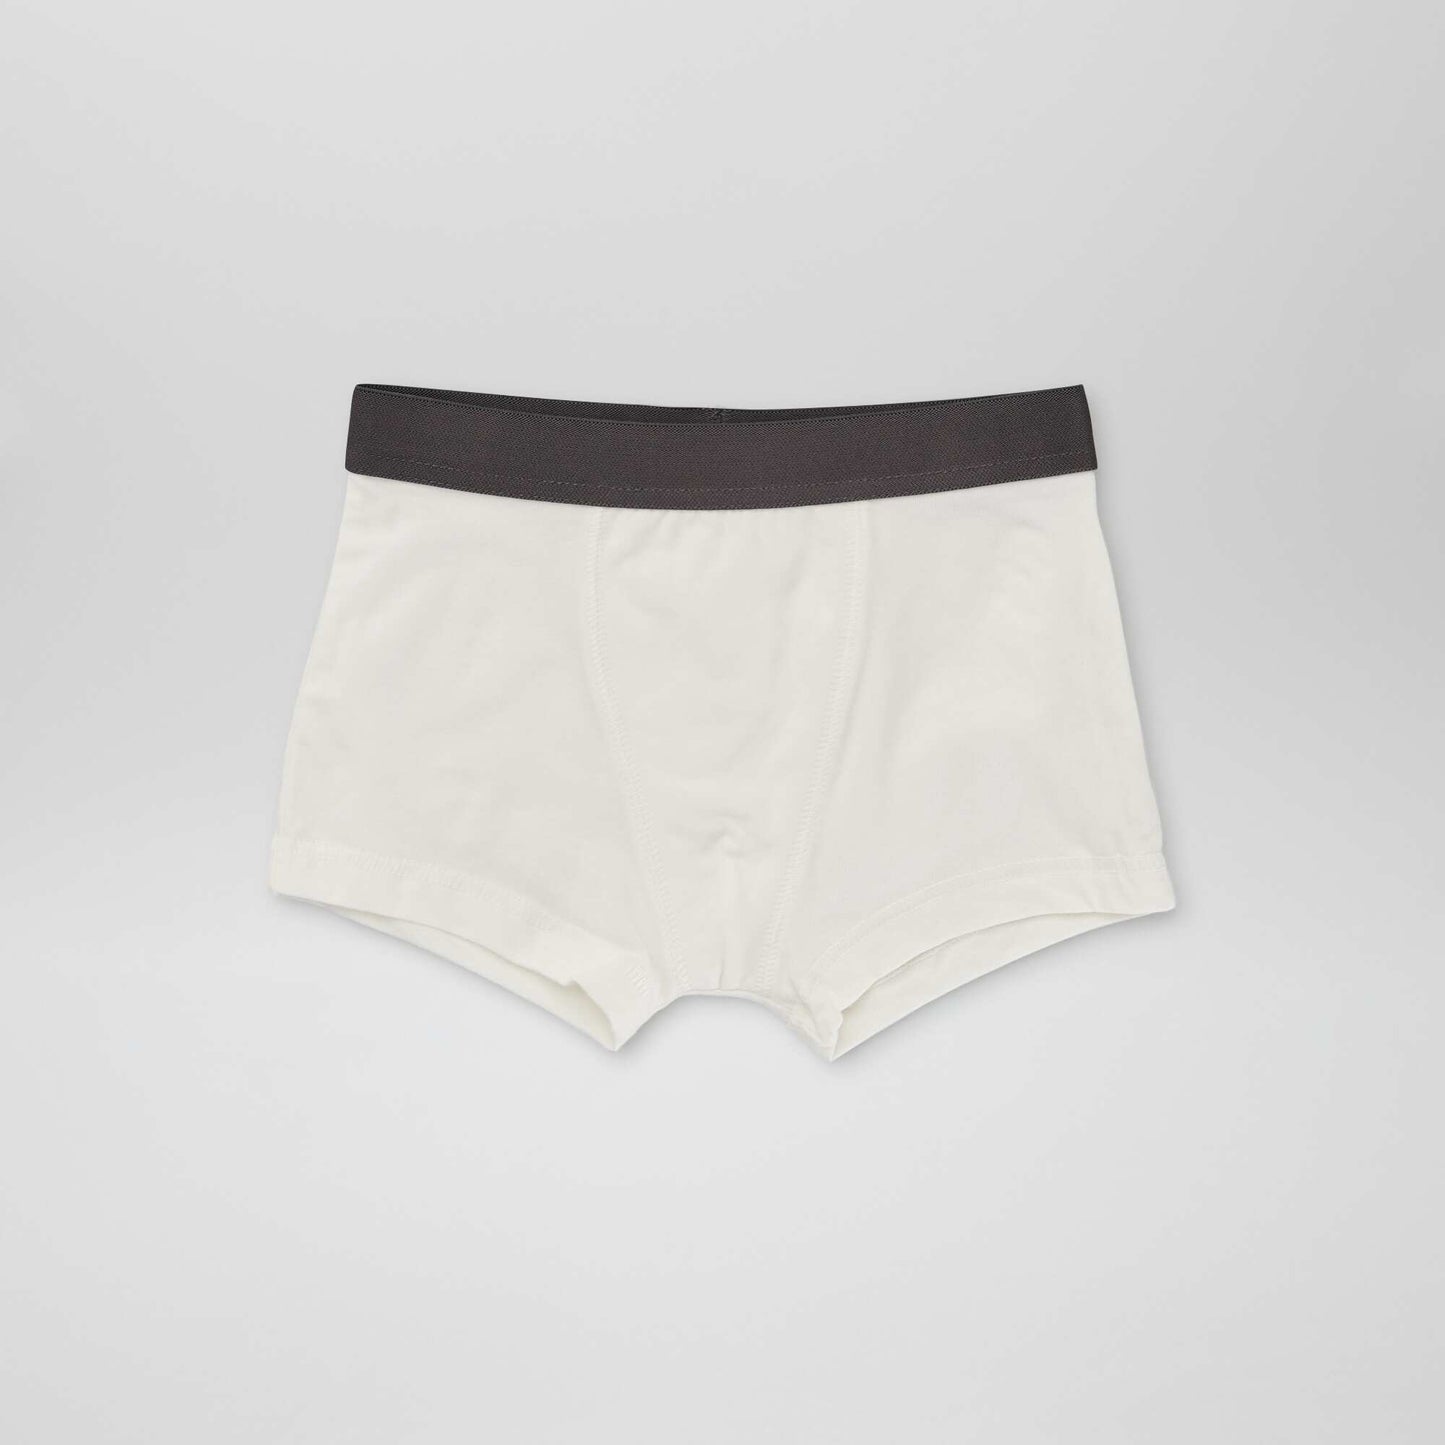 Pack of 3 pairs of boxer shorts BIKE_DINO